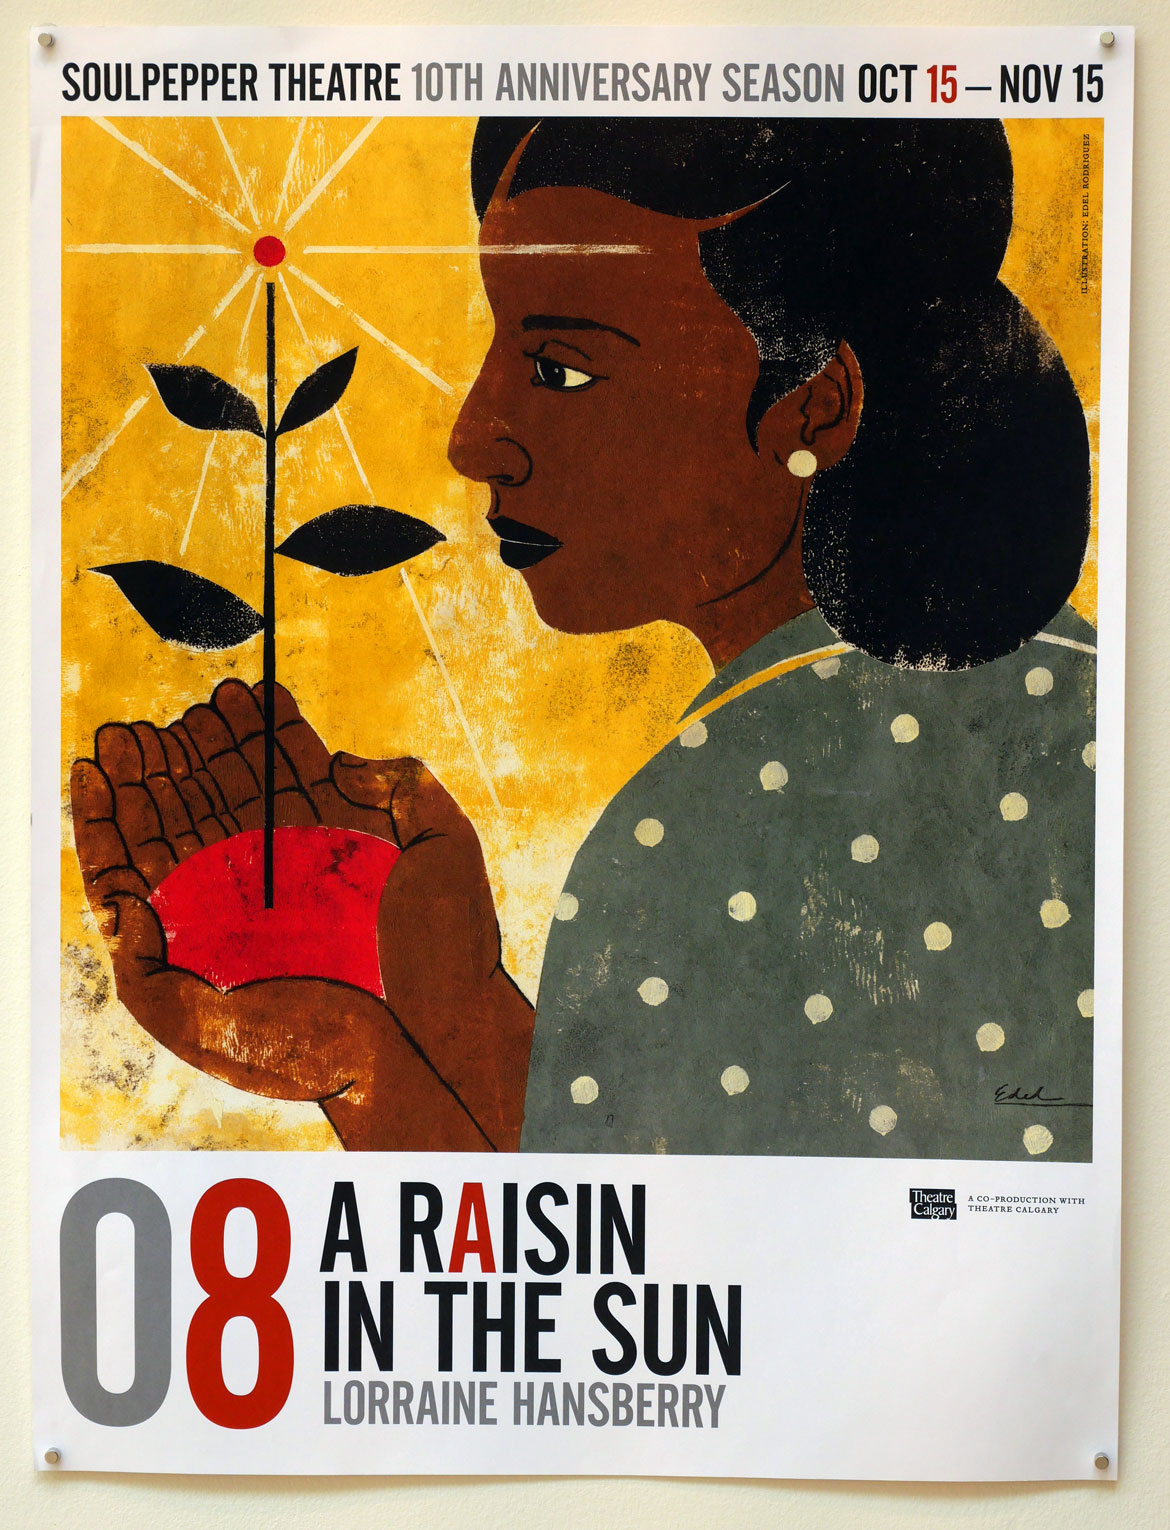 Edel Rodriguez's poster for "A Raisin in the Sun."